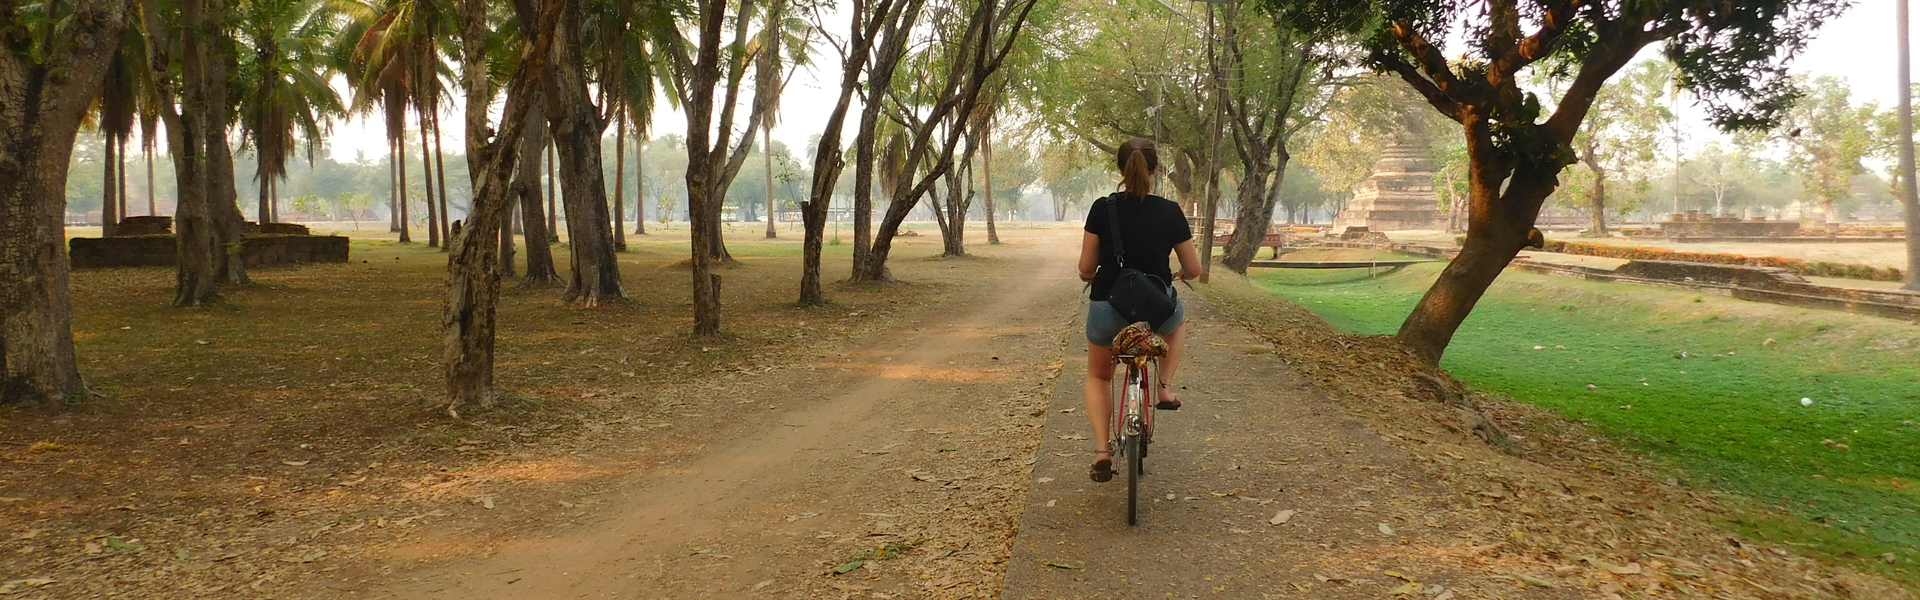 Young woman riding a bike in Chiang Mai, Thailand